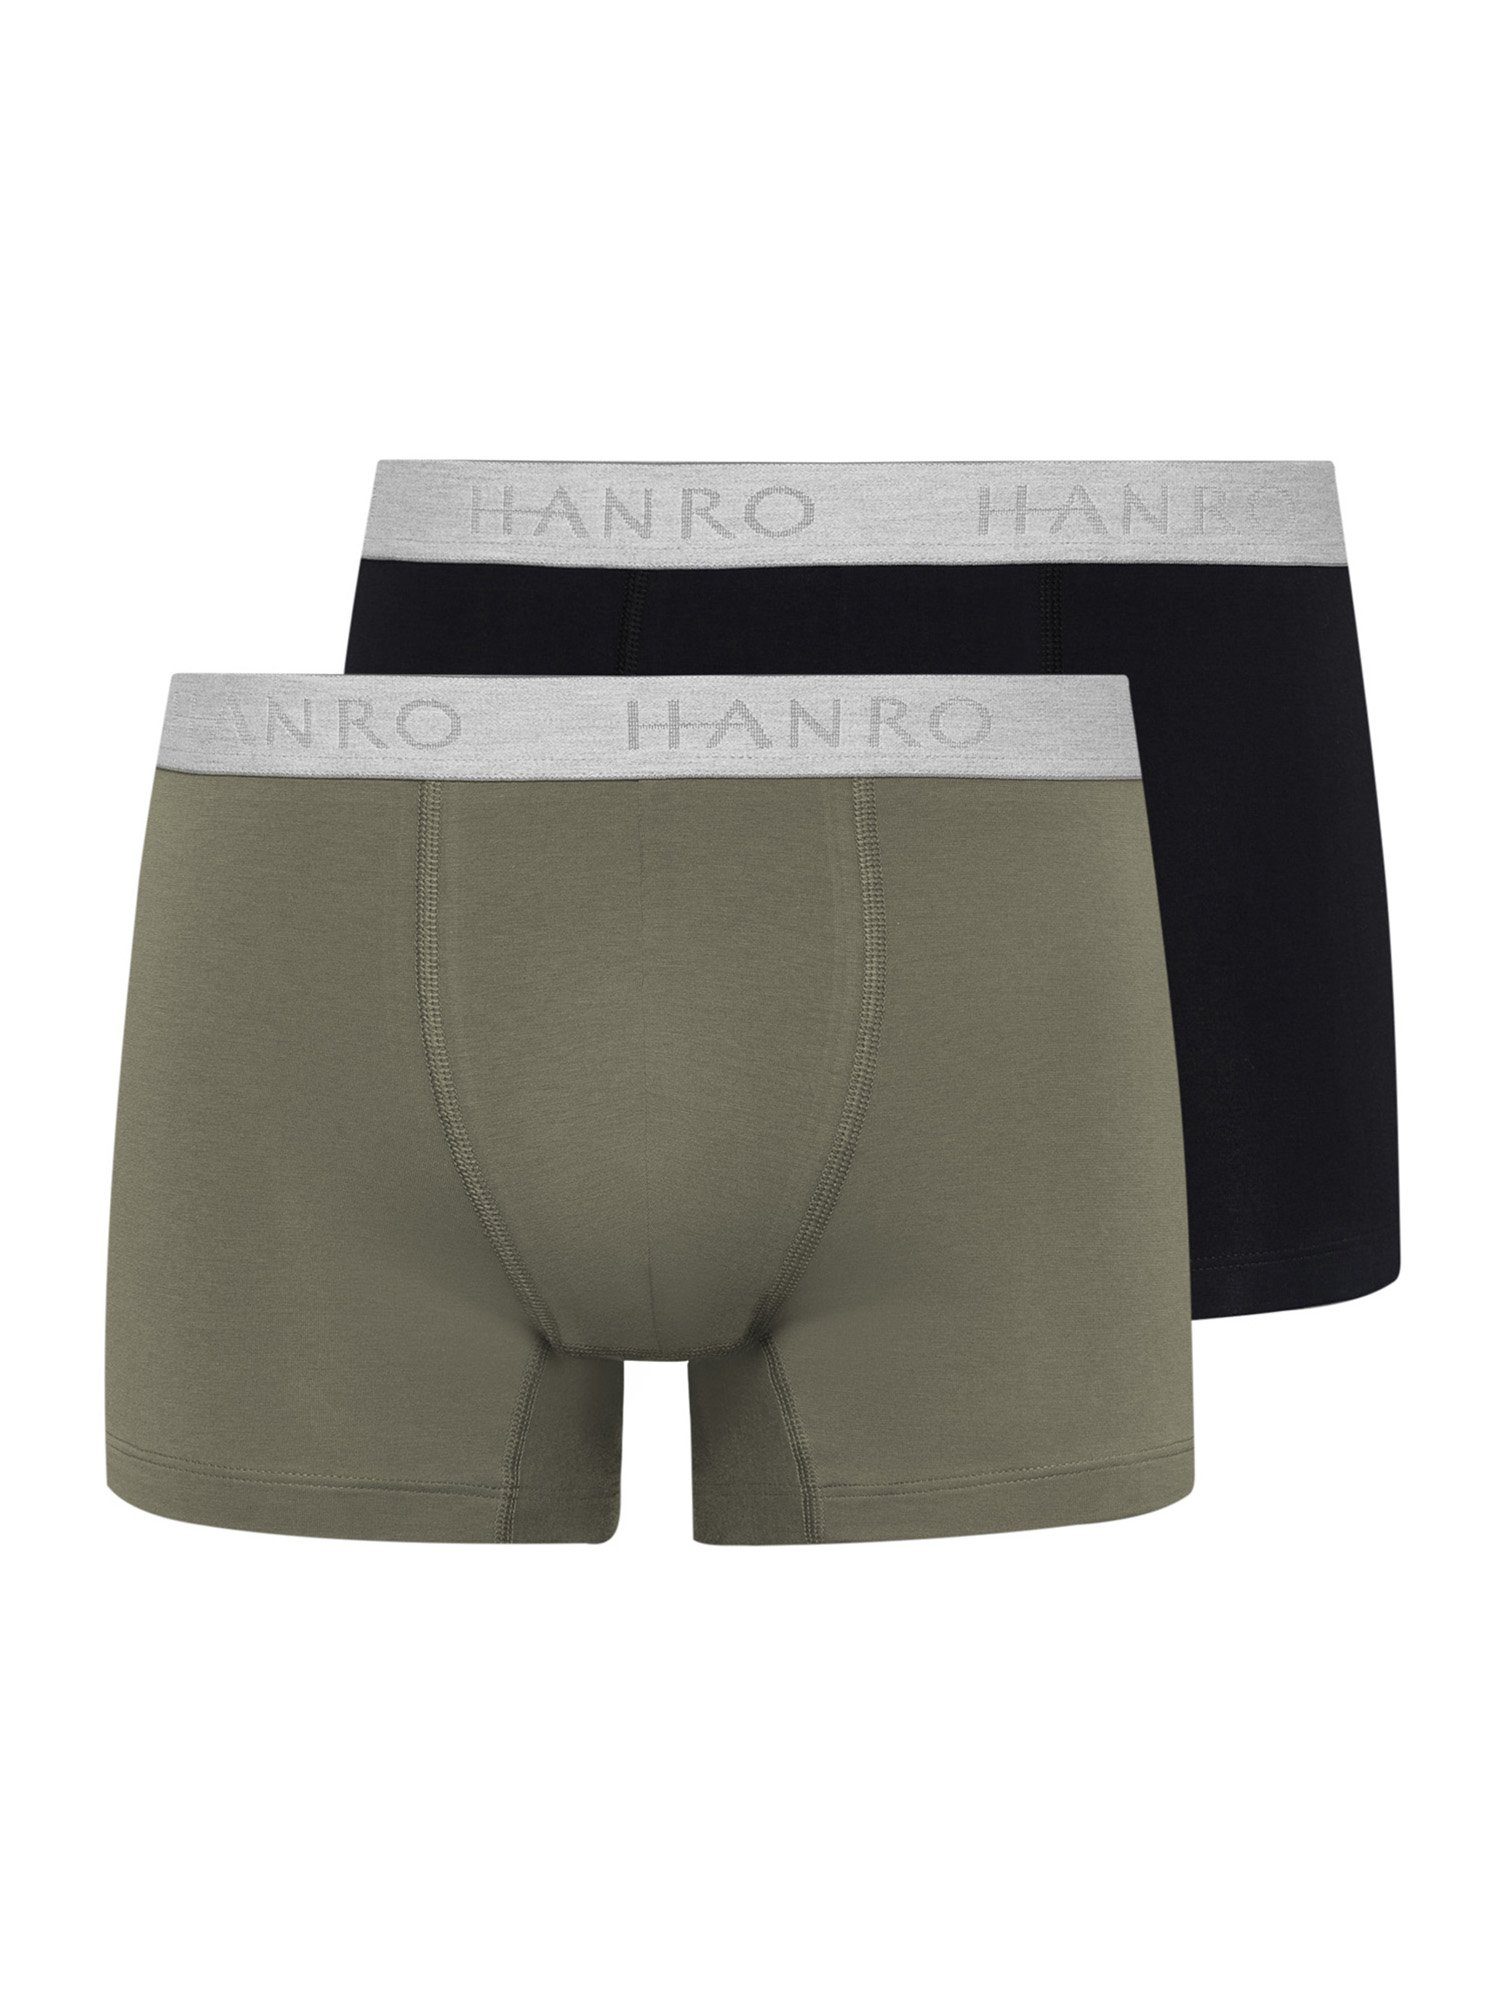 Hanro Retro Pants 2-Pack Cotton Essentials (2-St) antique green/ebony | Unterhosen